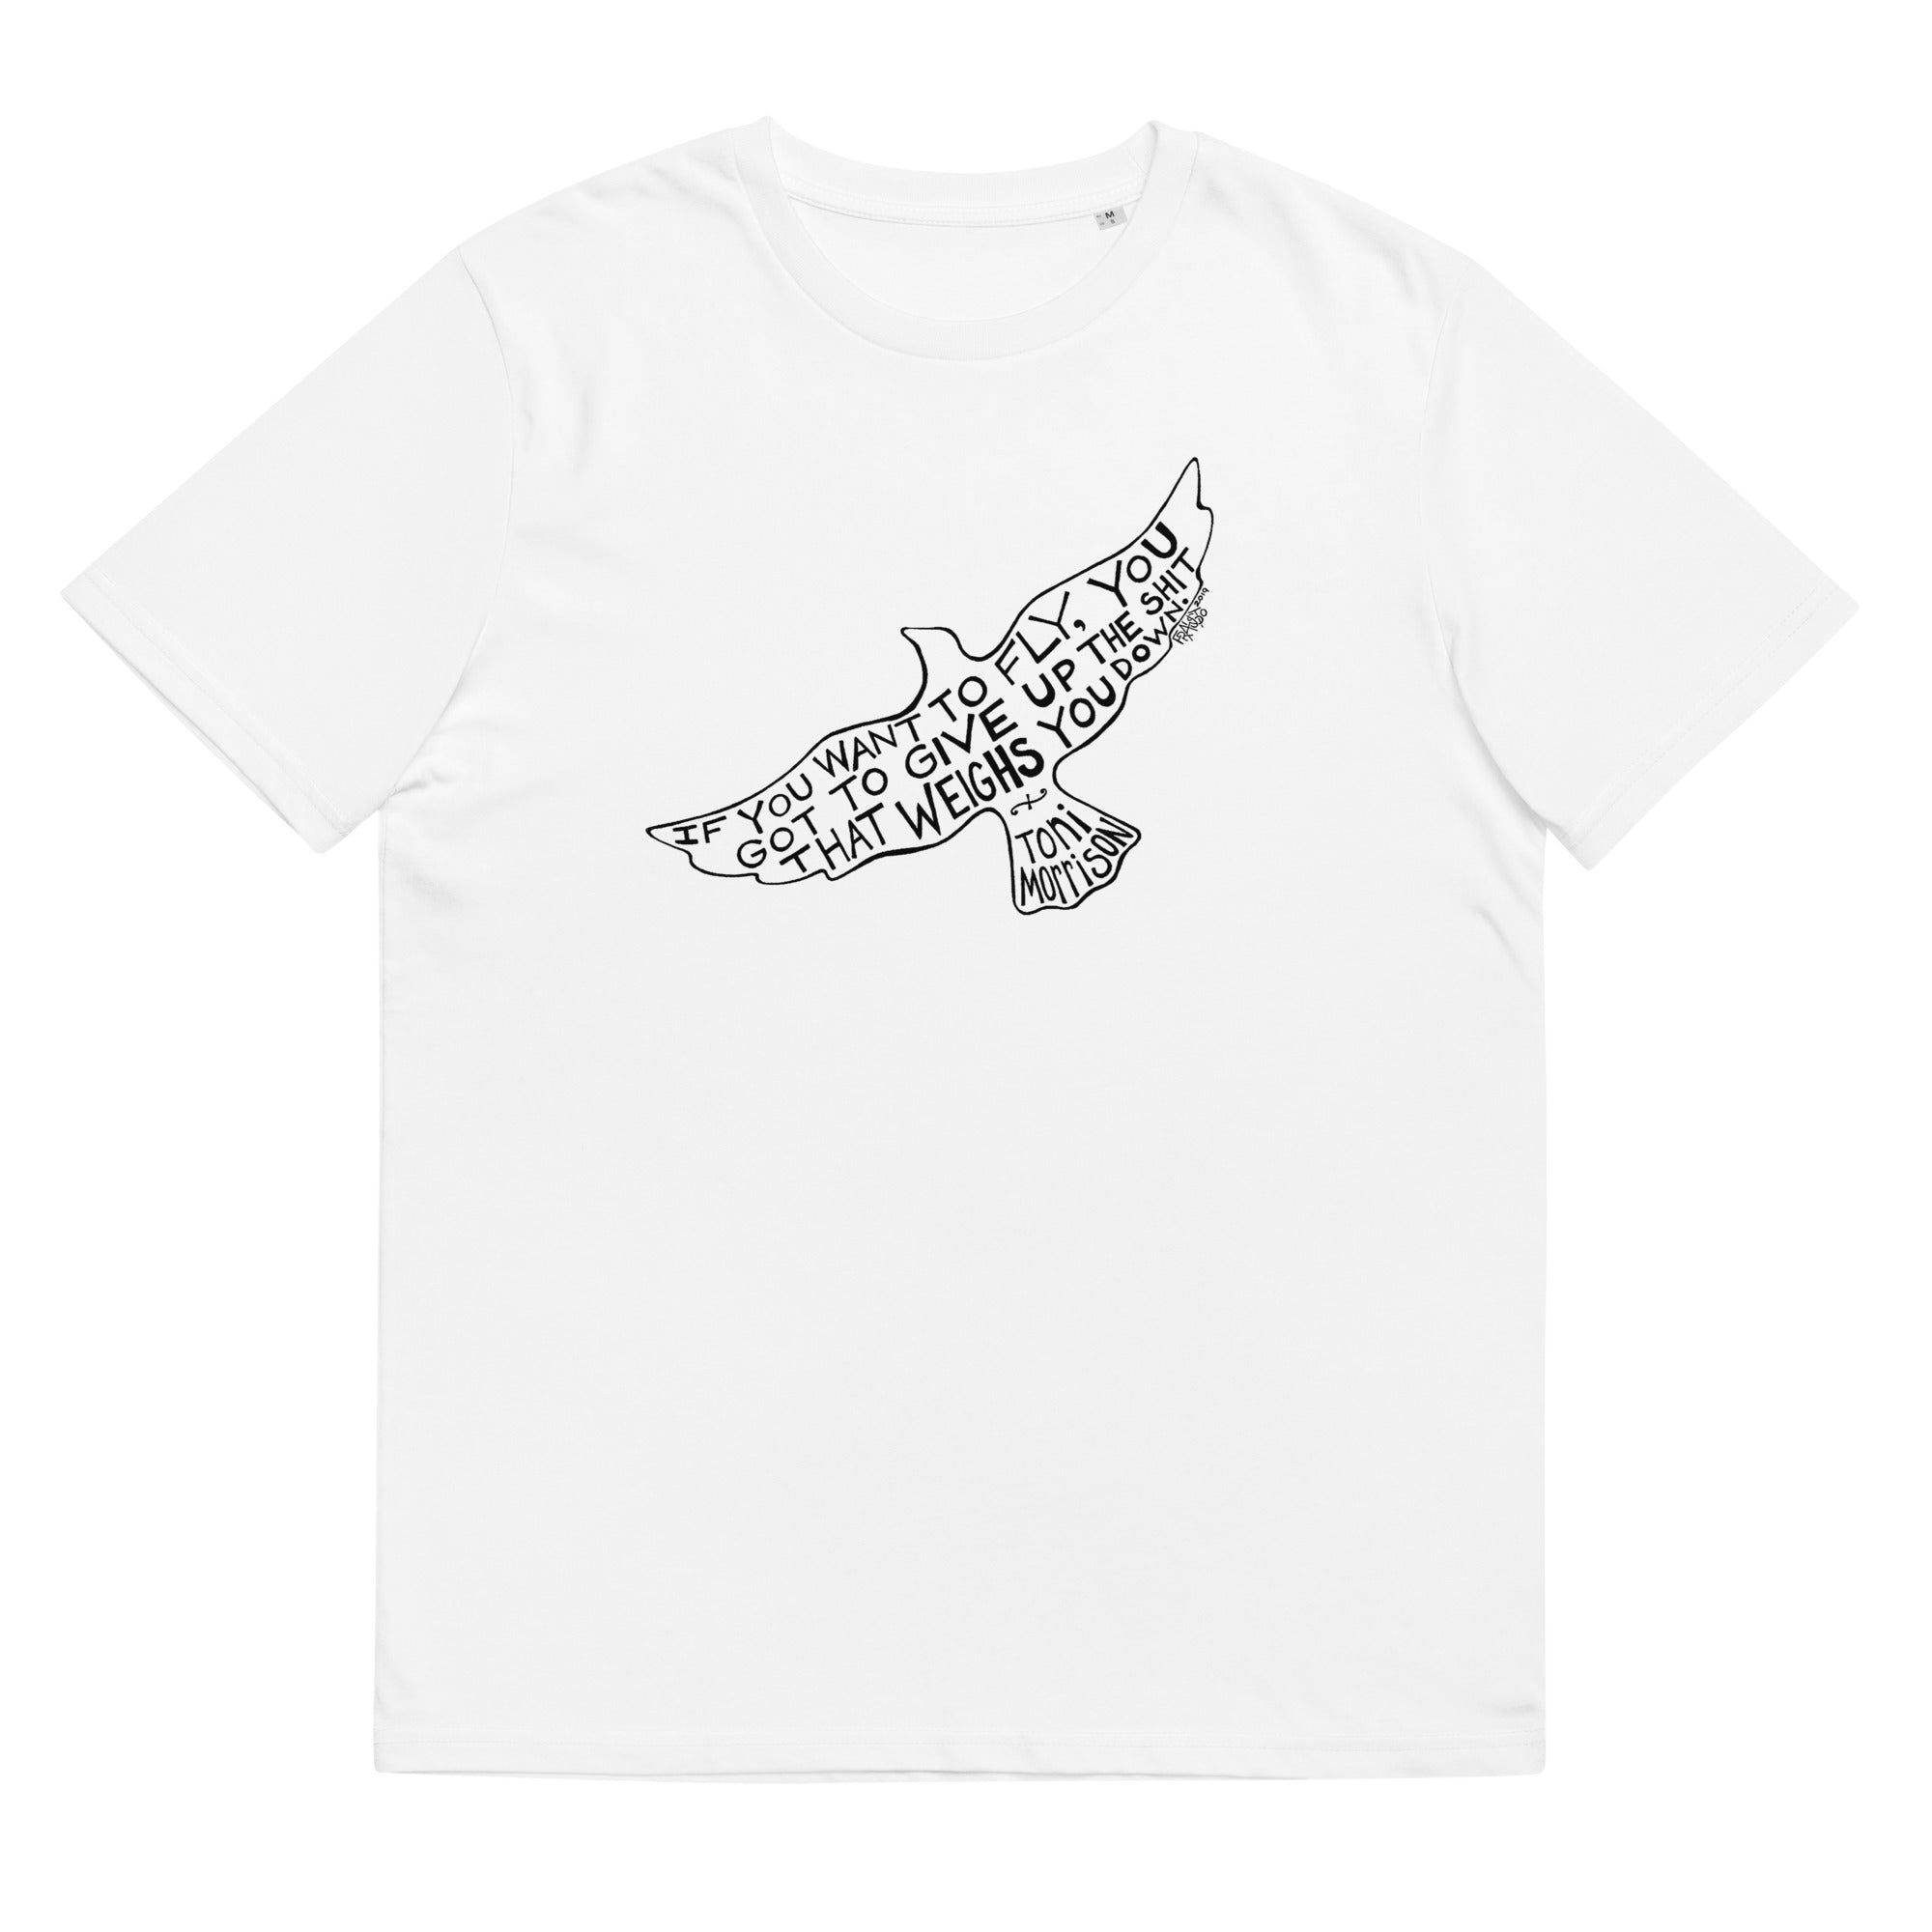 Toni Morrison Organic Cotton Gender Neutral Crew Neck T-Shirt In White By Artist Rick Frausto